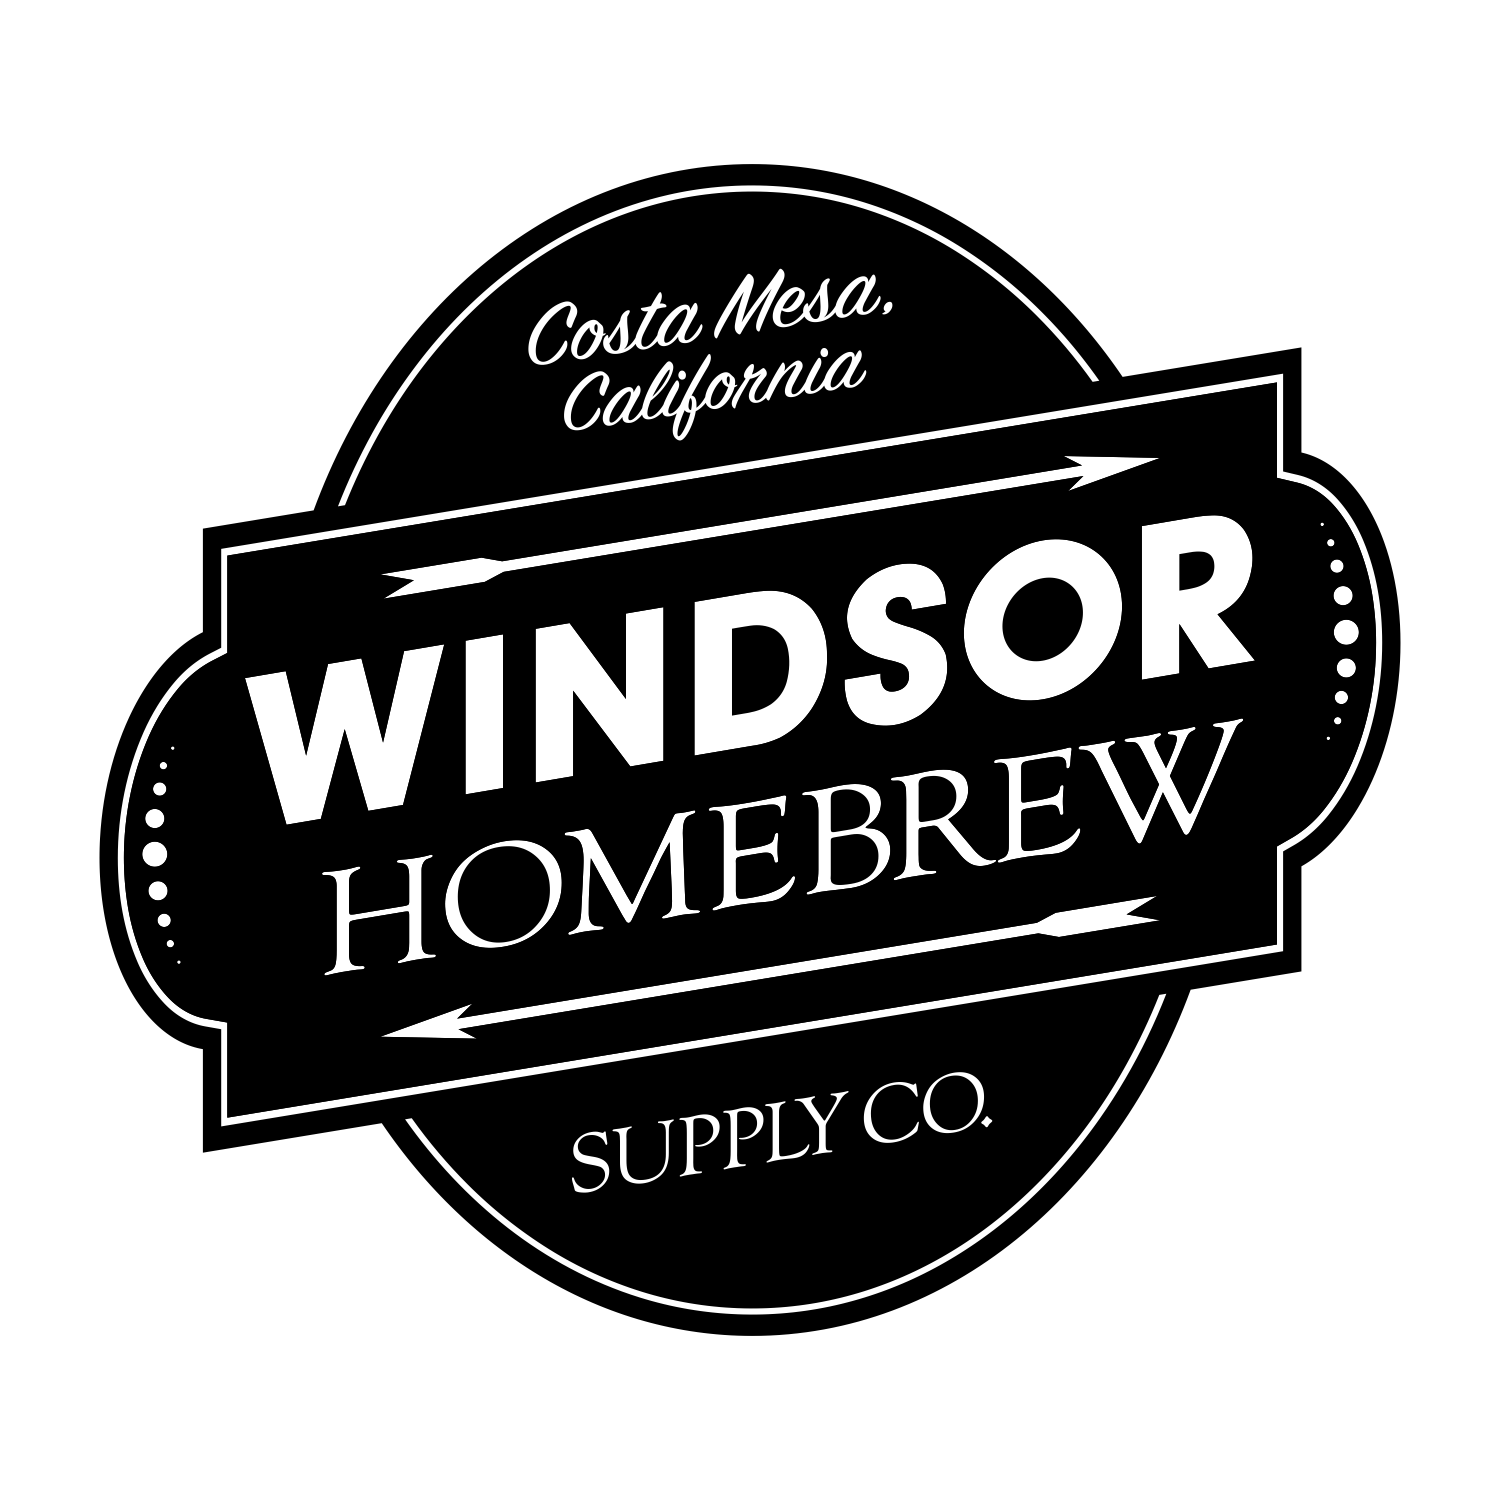 Windsor Homebrew Supply Co